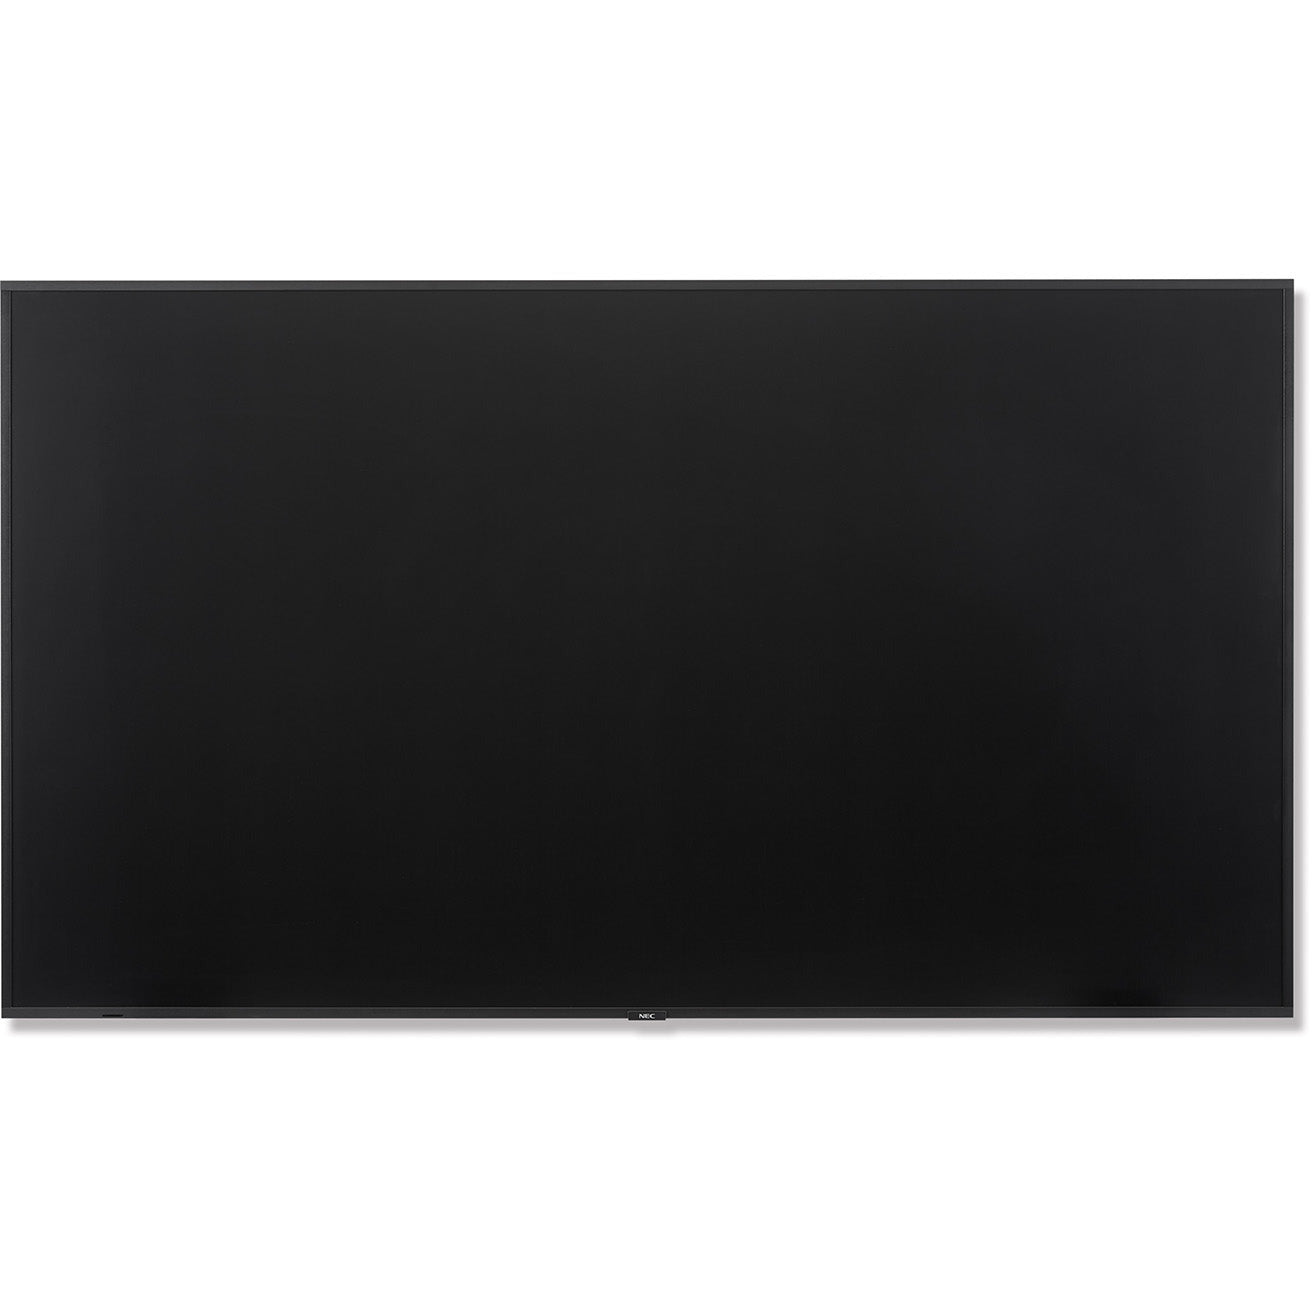 Black NEC MultiSync® M861 LCD 86" Message Large Format Display